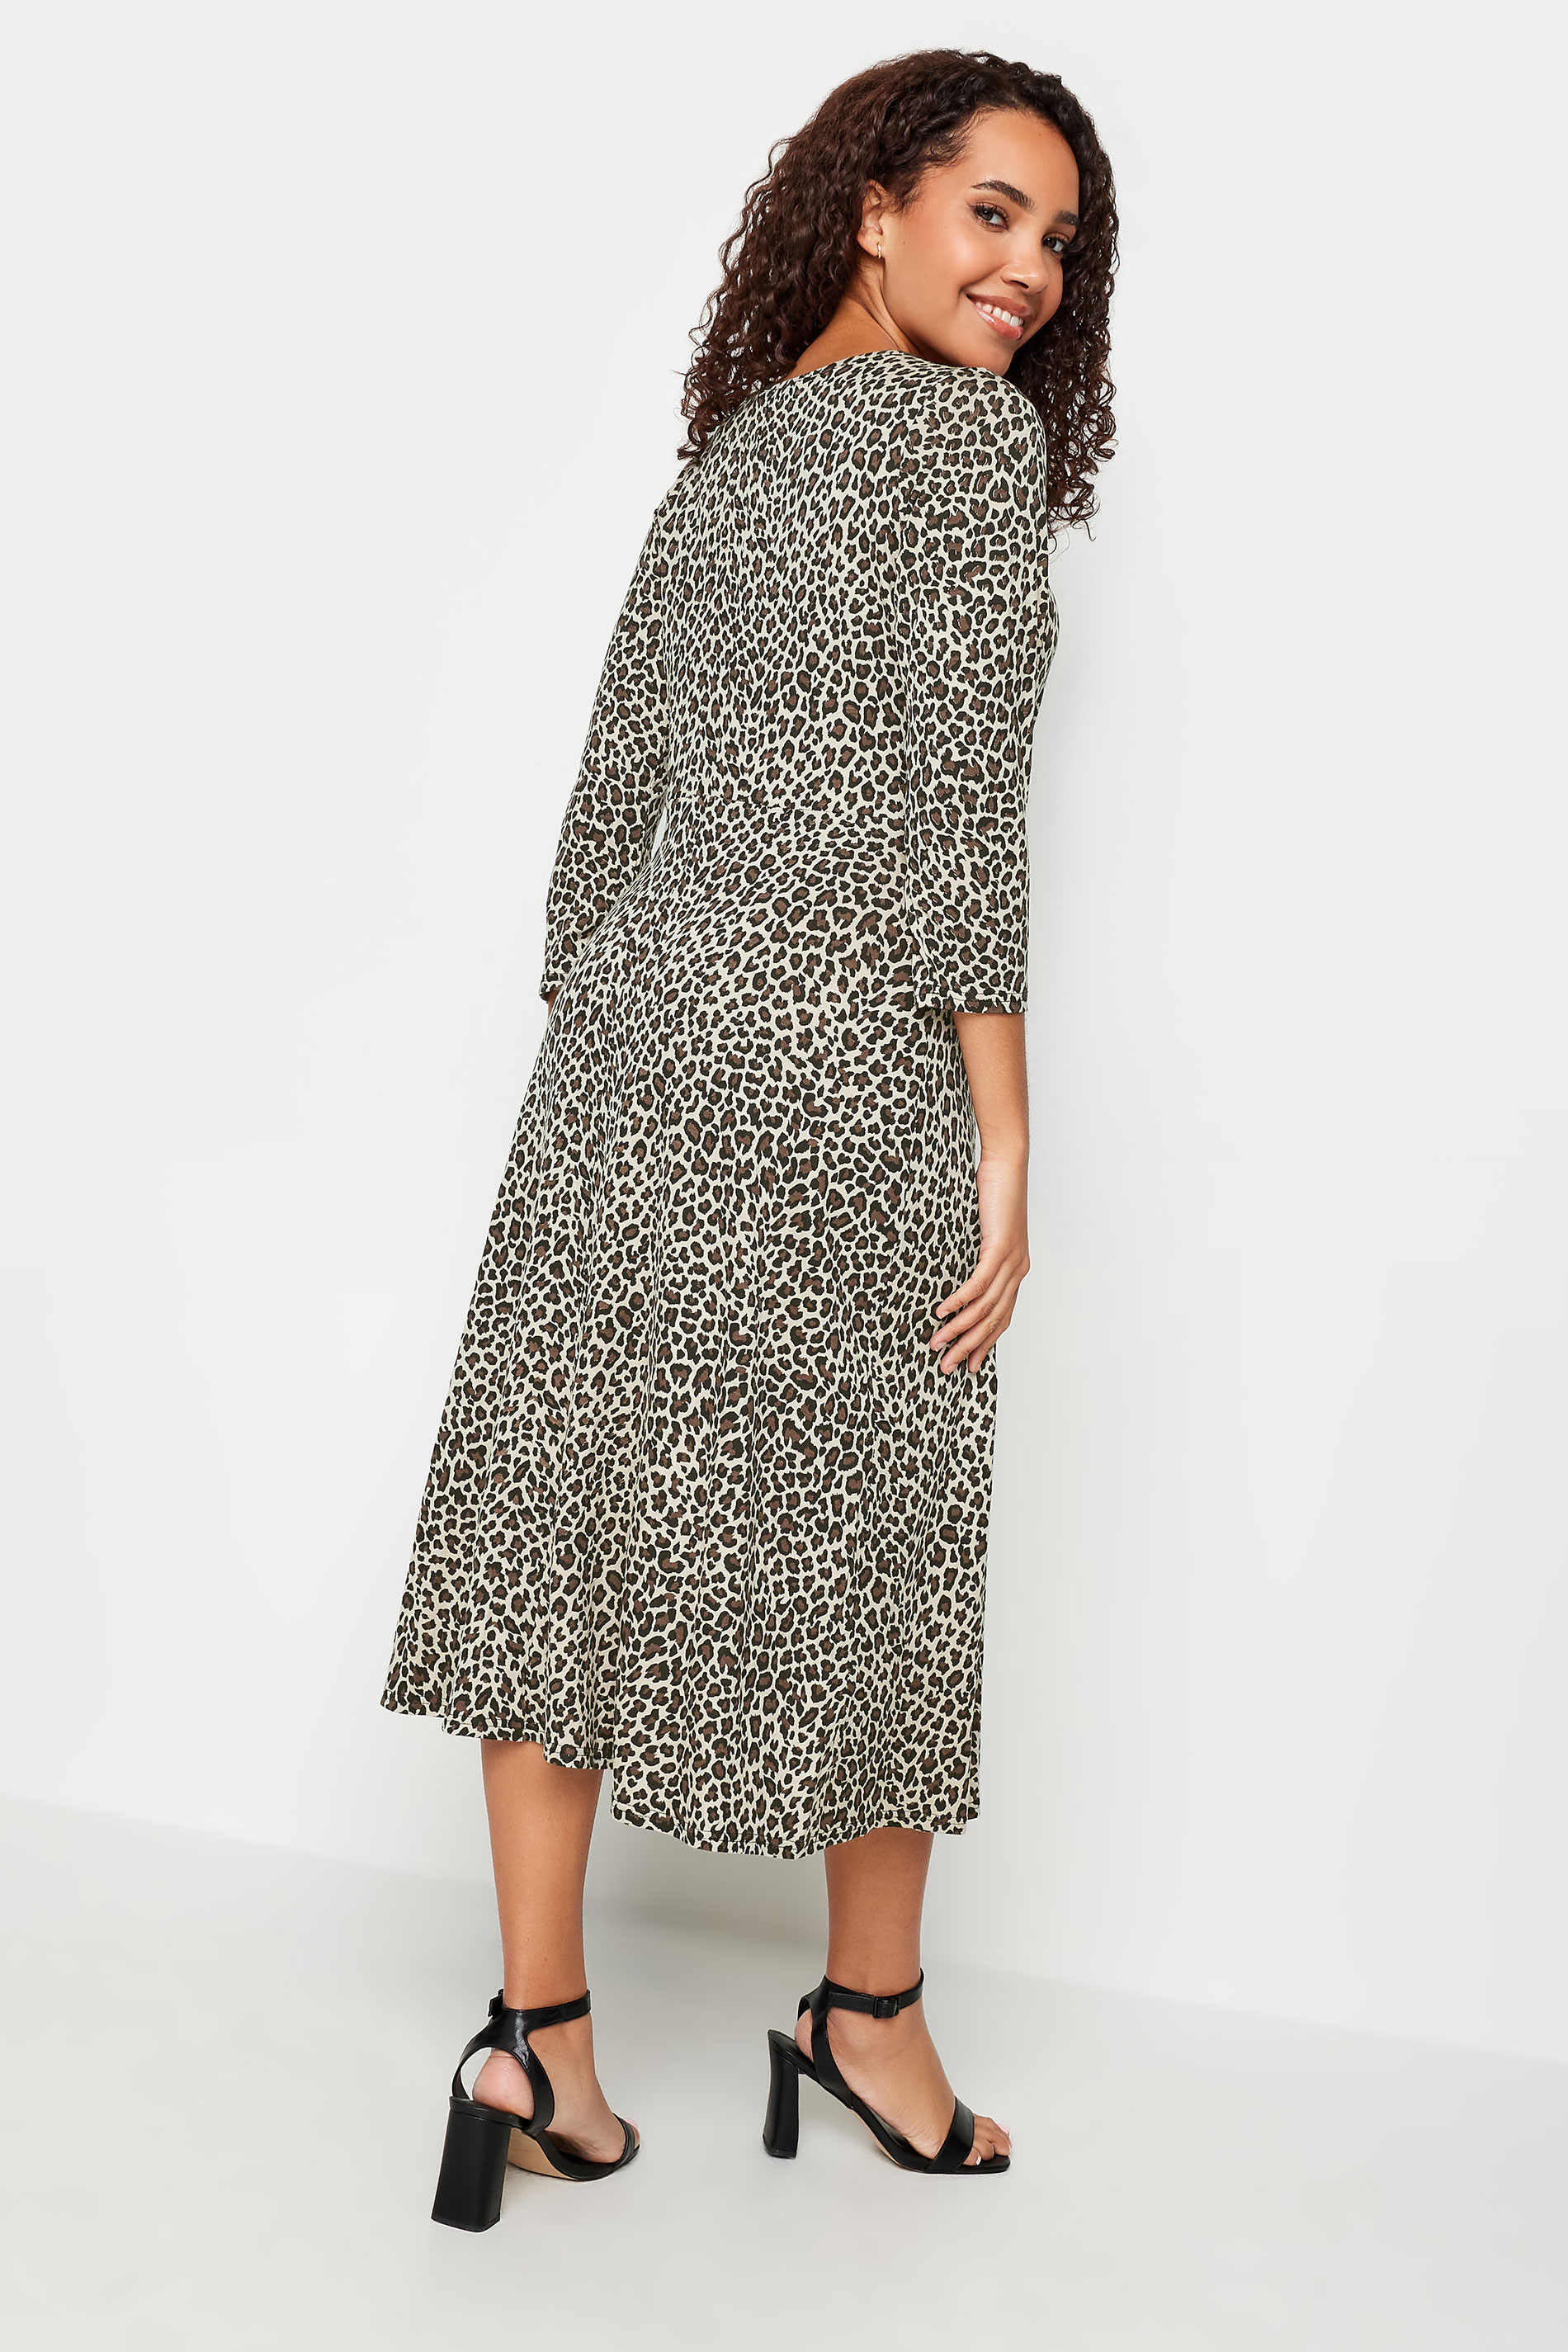 M&Co Natural Brown Leopard Print Midi Dress | M&Co 3